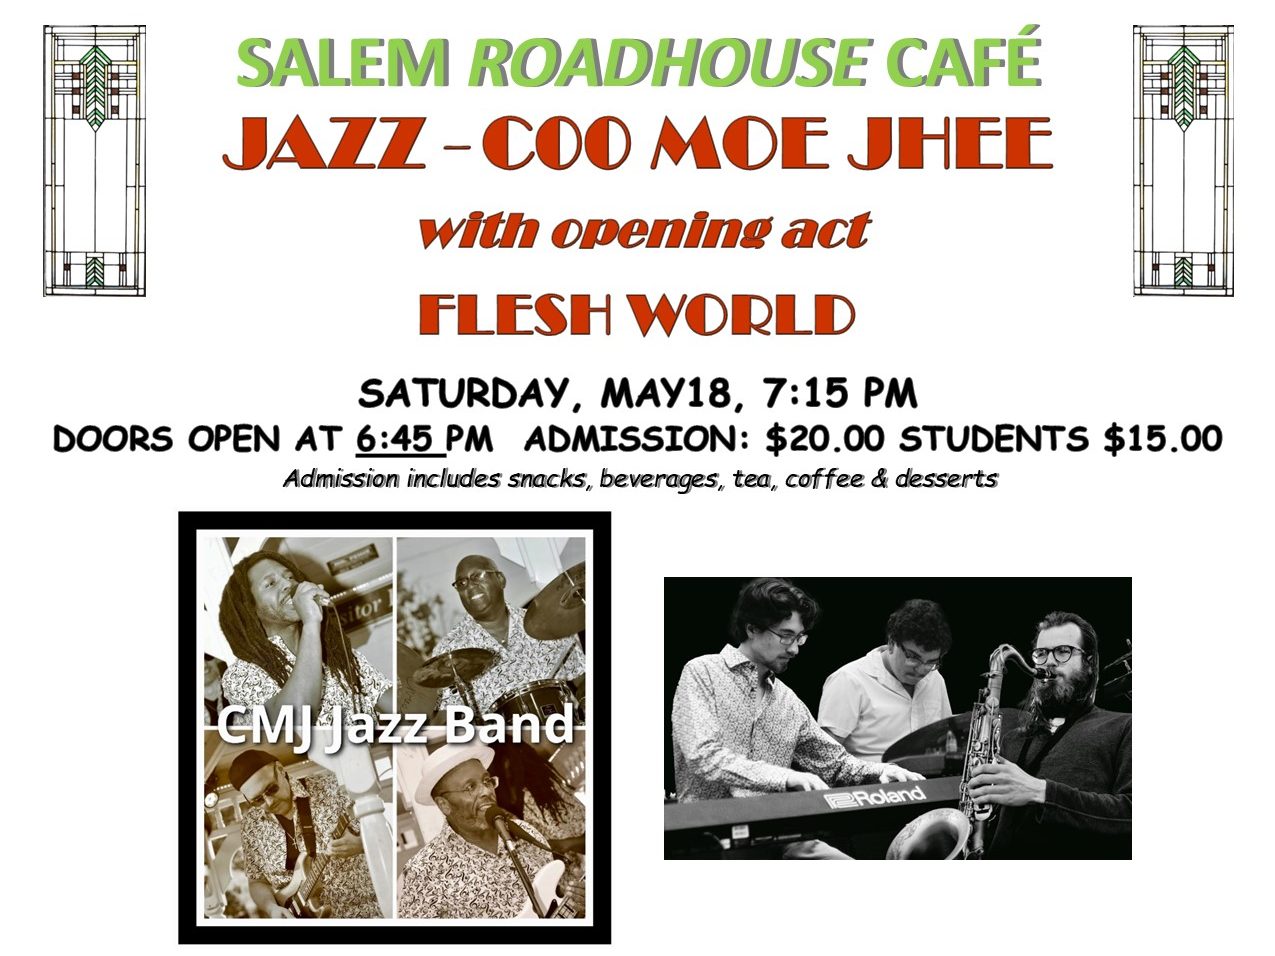 CMJ Jazz Band and Flesh World to perform at Salem Roadhouse Café